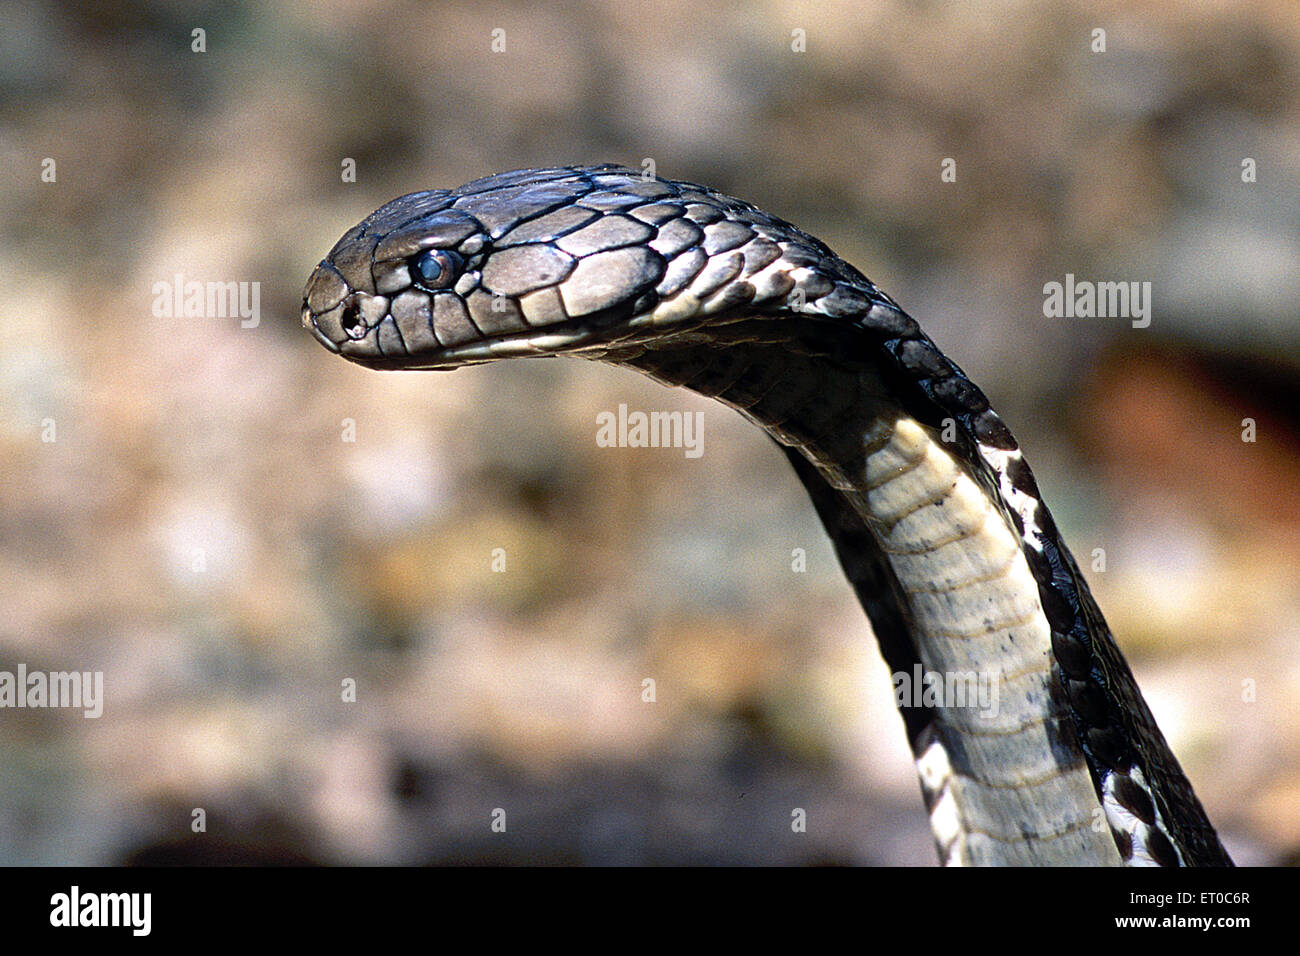 Rey cobra, ophiophagus hannah, la serpiente venenosa más larga, Karnataka ; India, asia Foto de stock